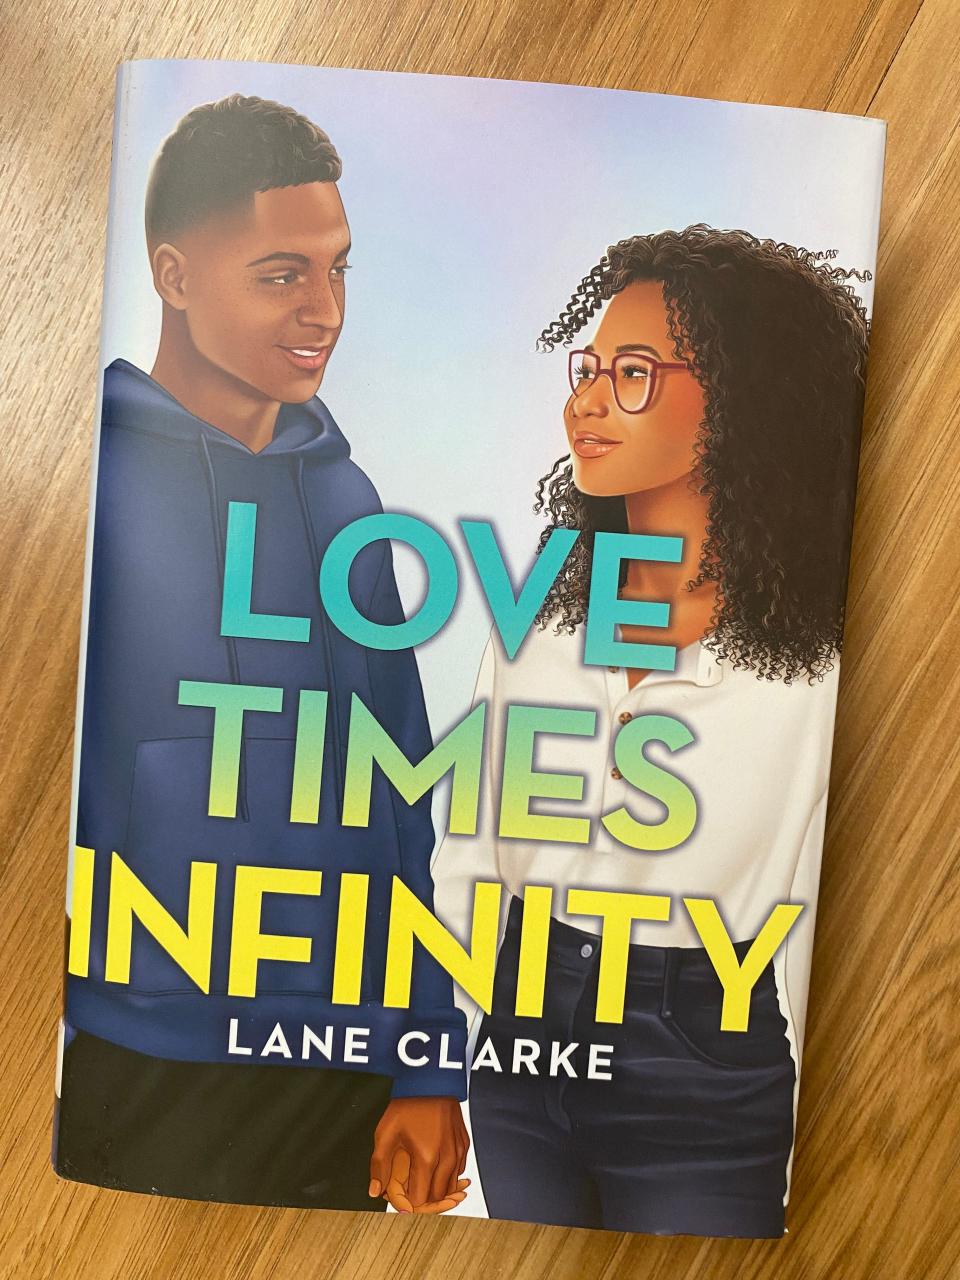 "Love Time Infinity" novel by Lane Clarke